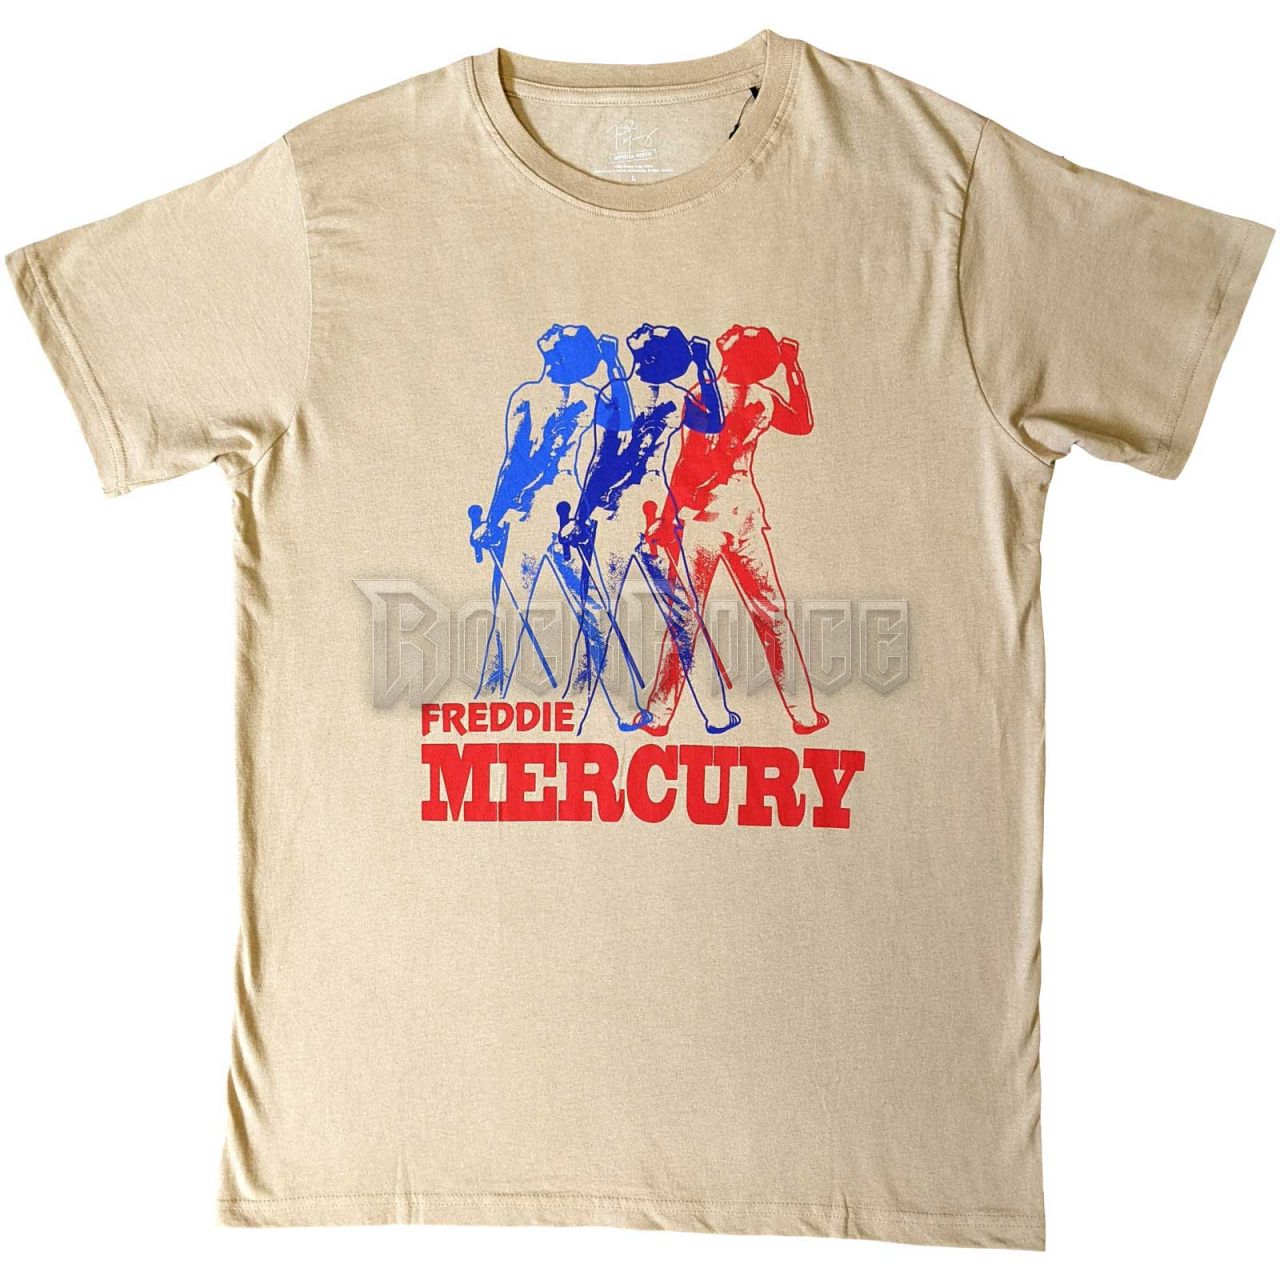 Freddie Mercury - Multicolour Photo - unisex póló - FREDTS06MS